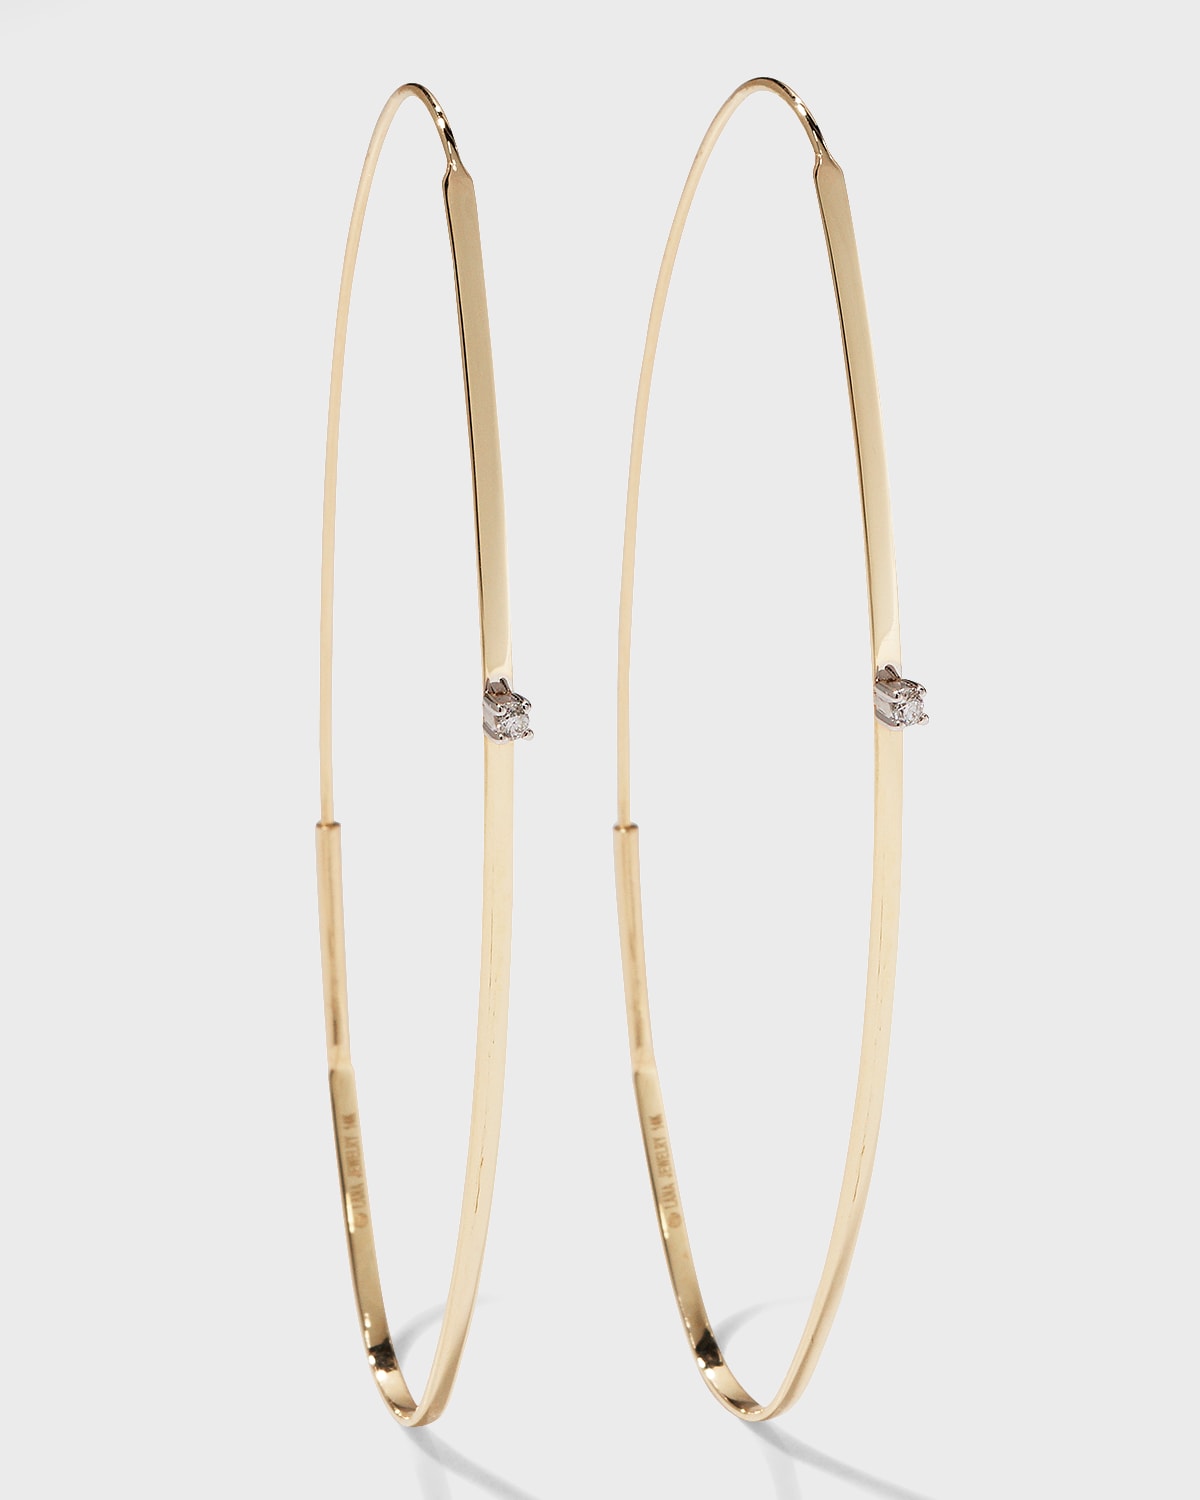 Lana Large 14k Oval Magic Hoop Earrings With Diamonds